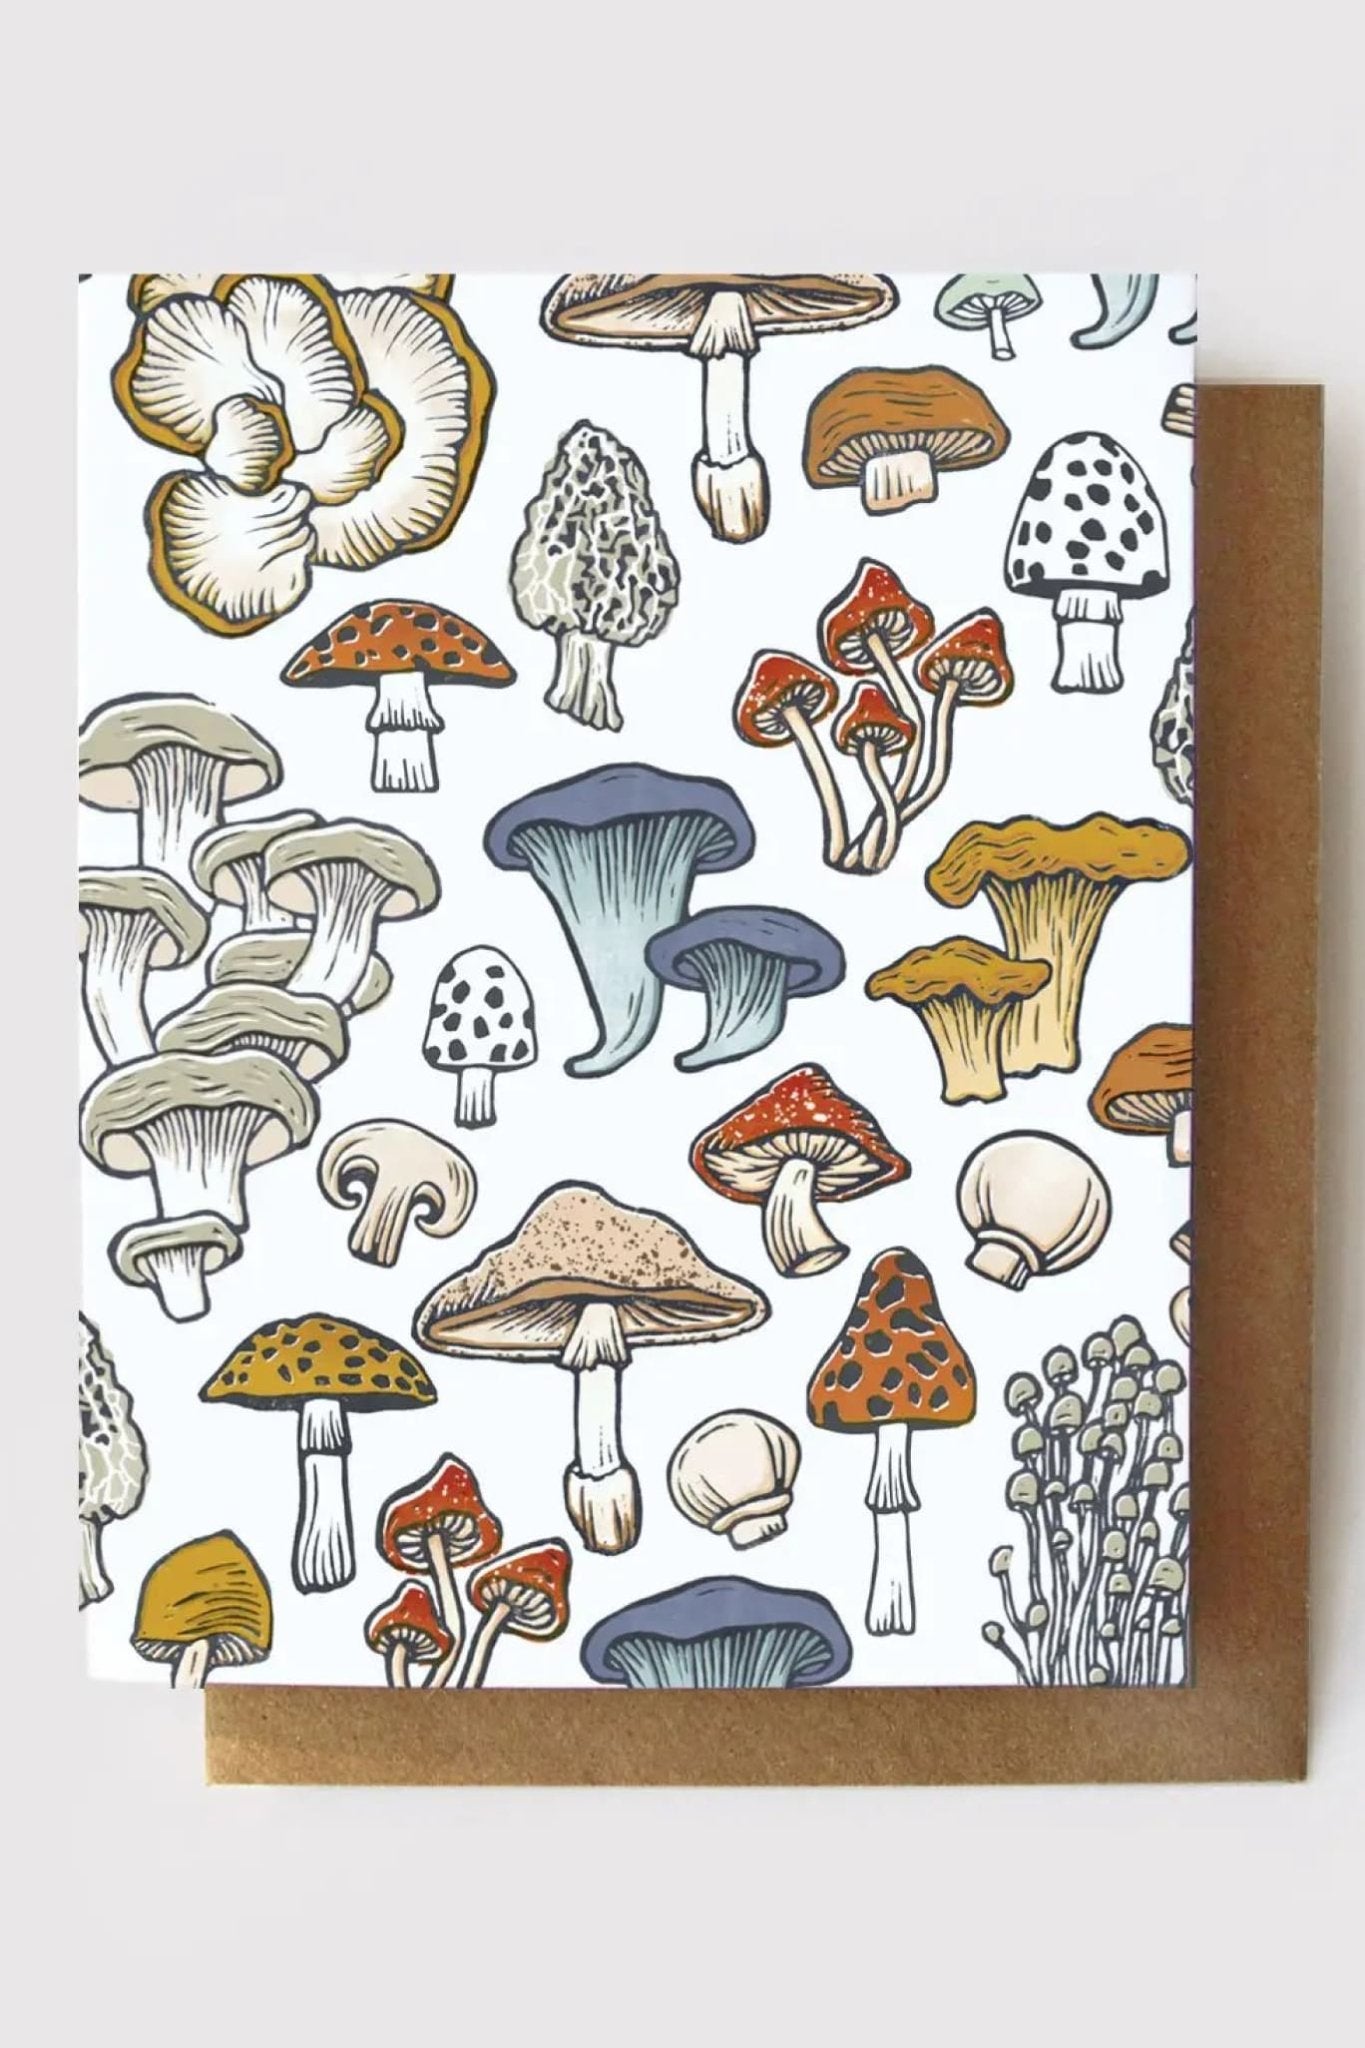 Mushroom & Fungi Everyday Greeting Card - Greeting & Note Cards